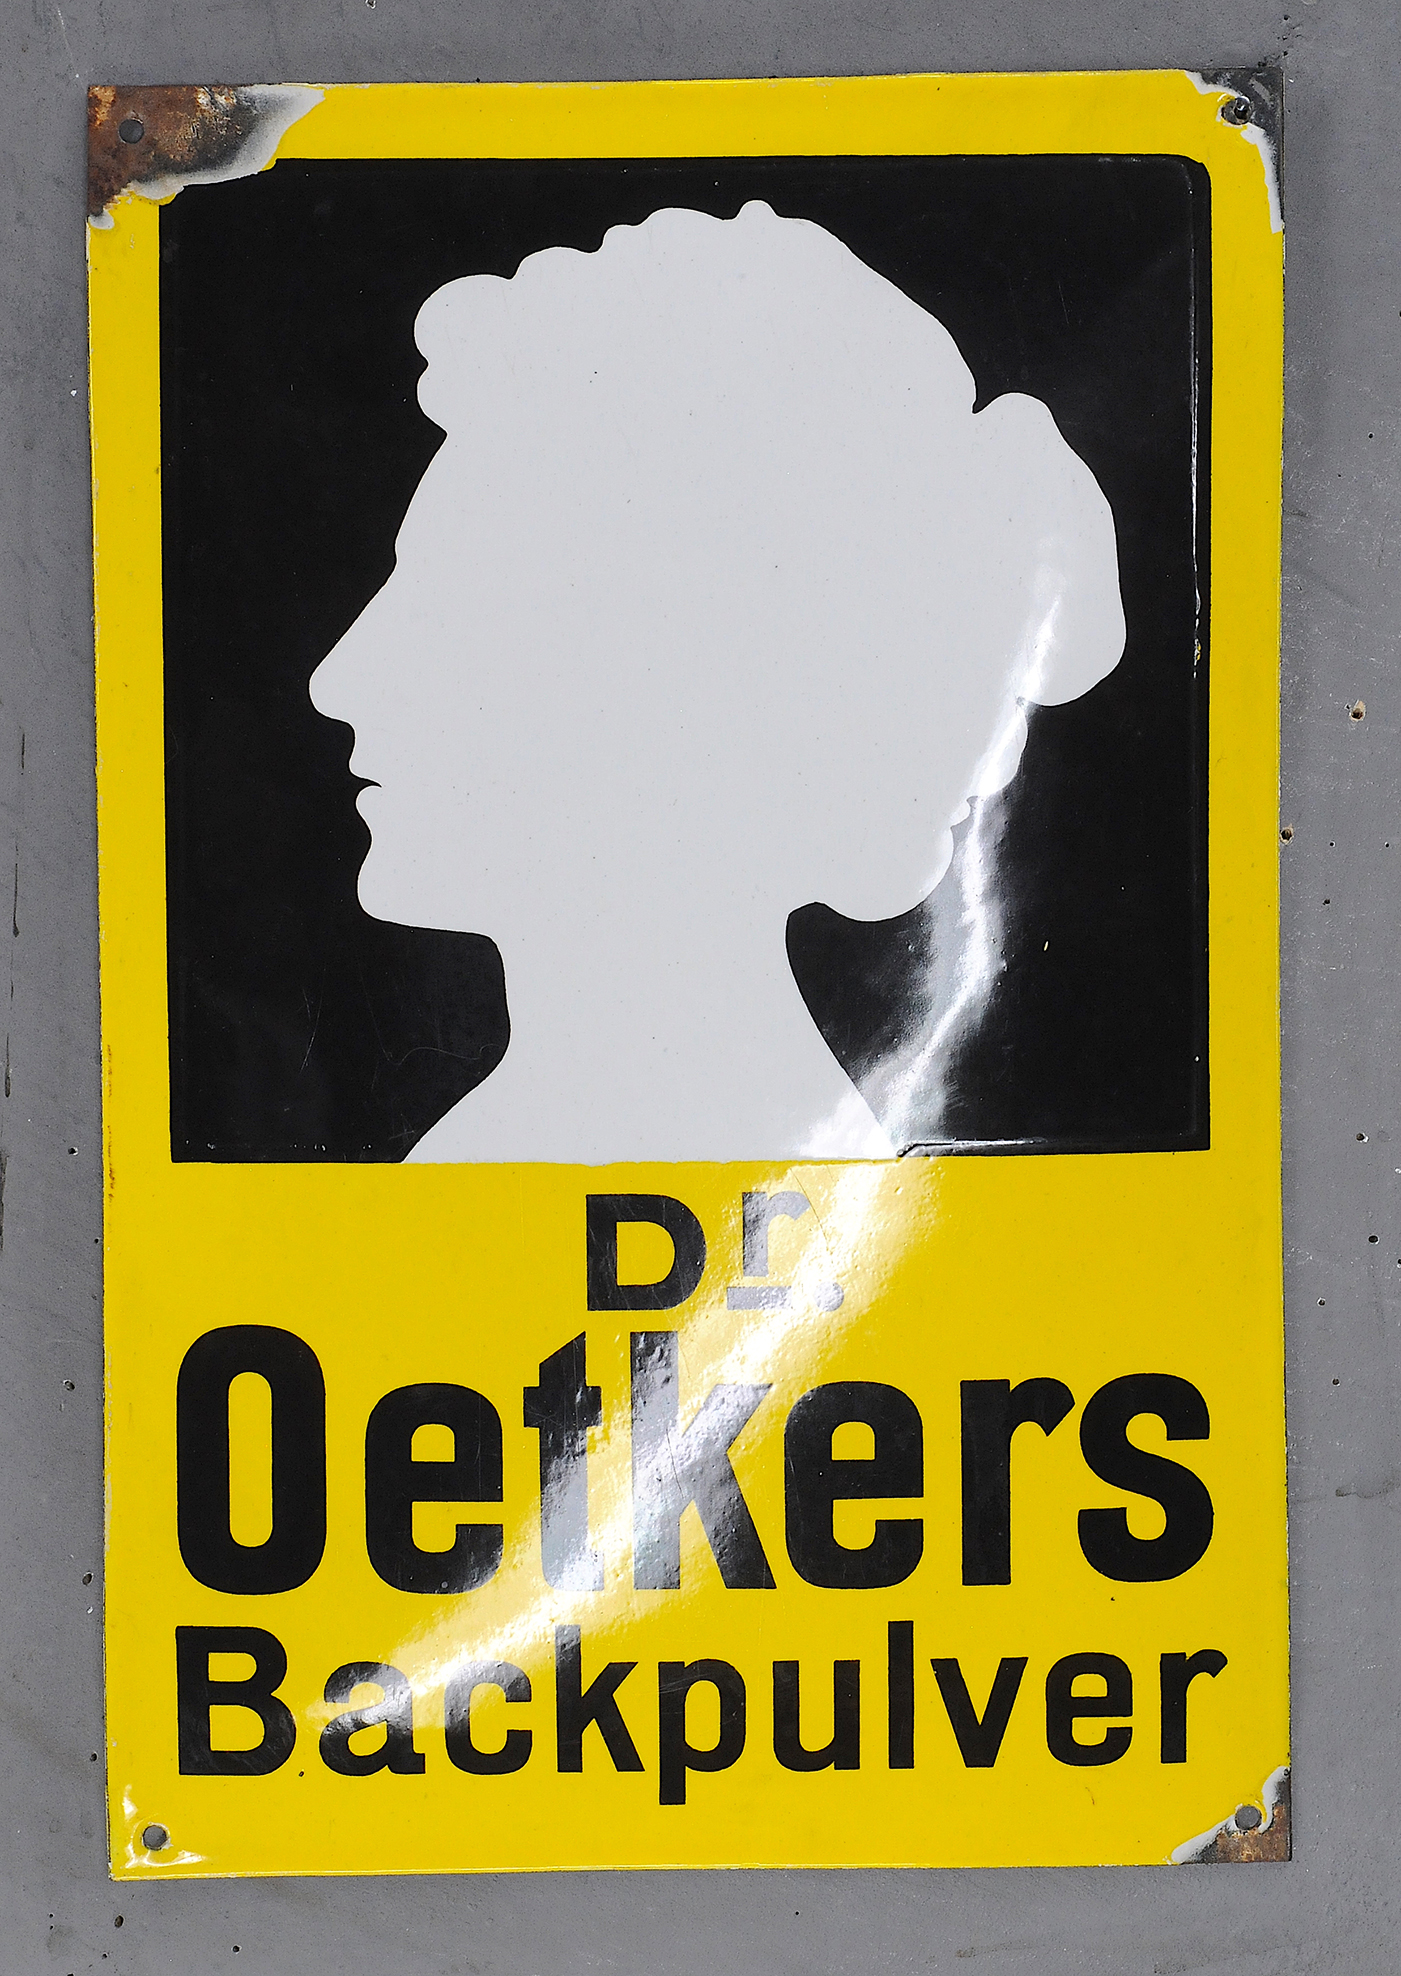 Dr. Oetkers Backpulver - Image 3 of 3